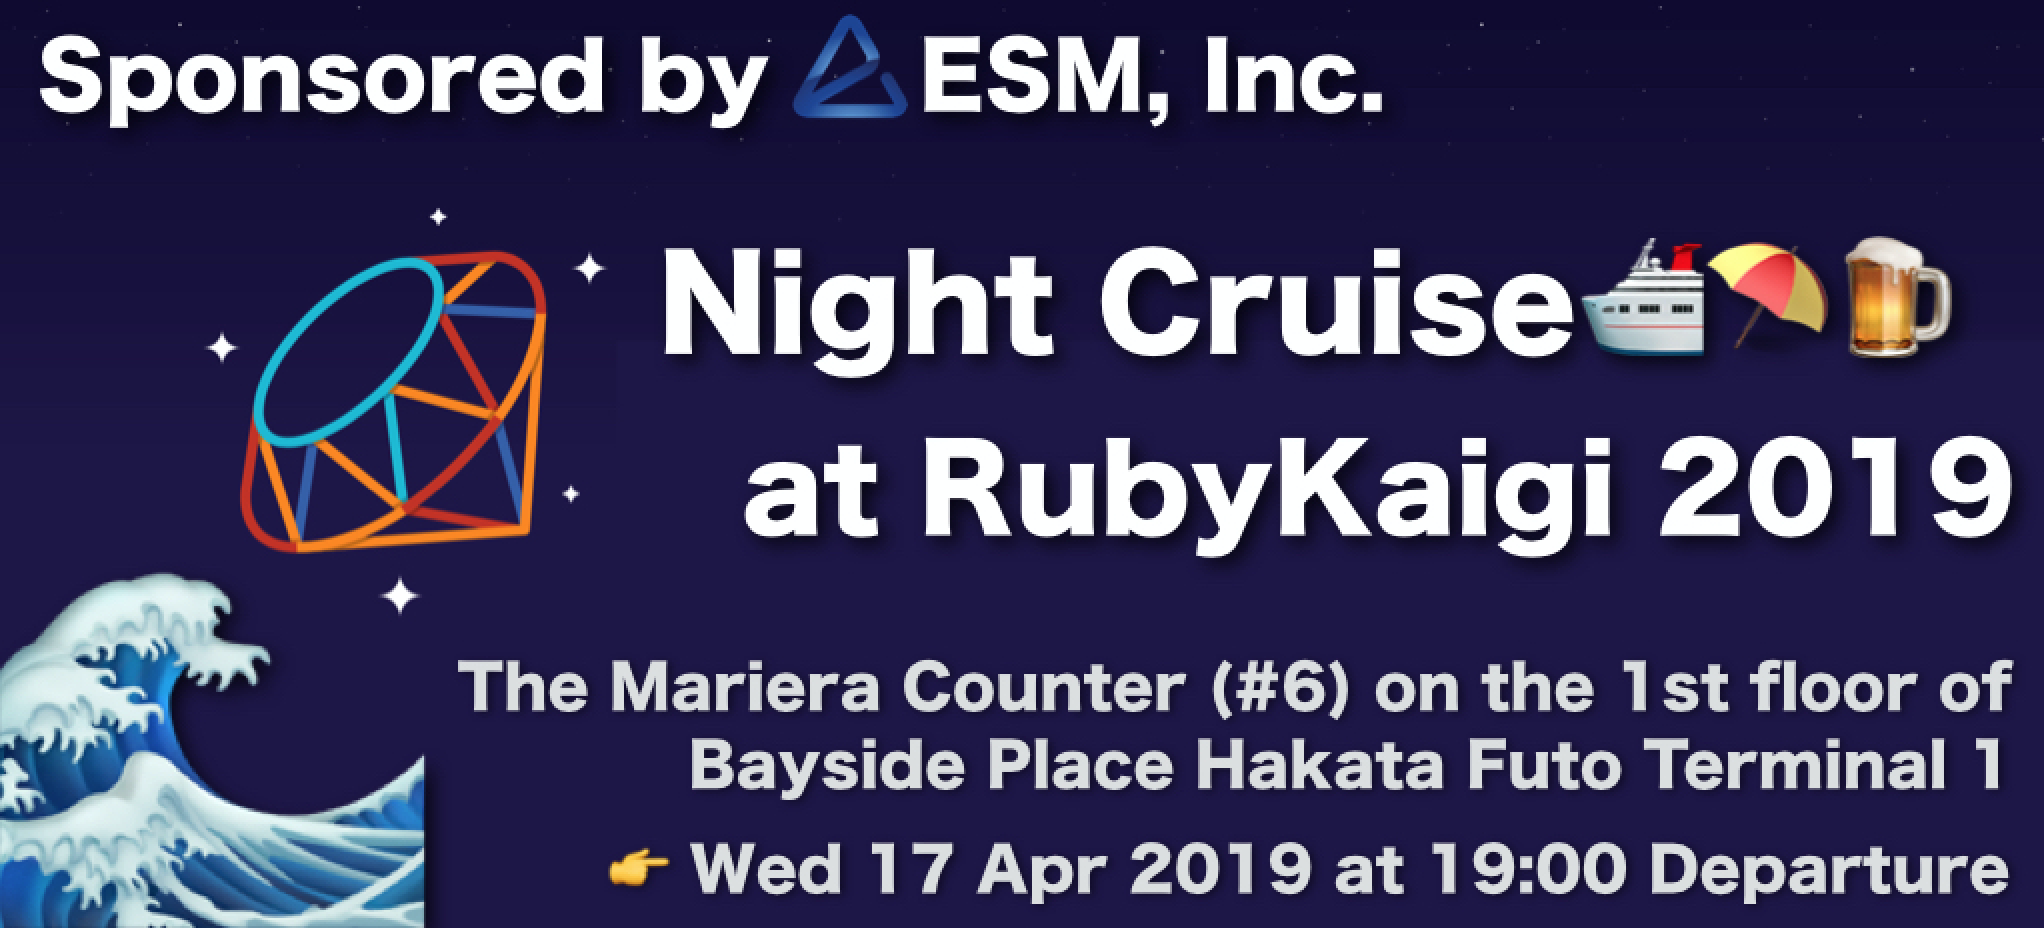 RubyKaigi 2019 に Night Cruise Sponsor として協賛します - 株式会社永和システムマネジメント アジャイル事業部